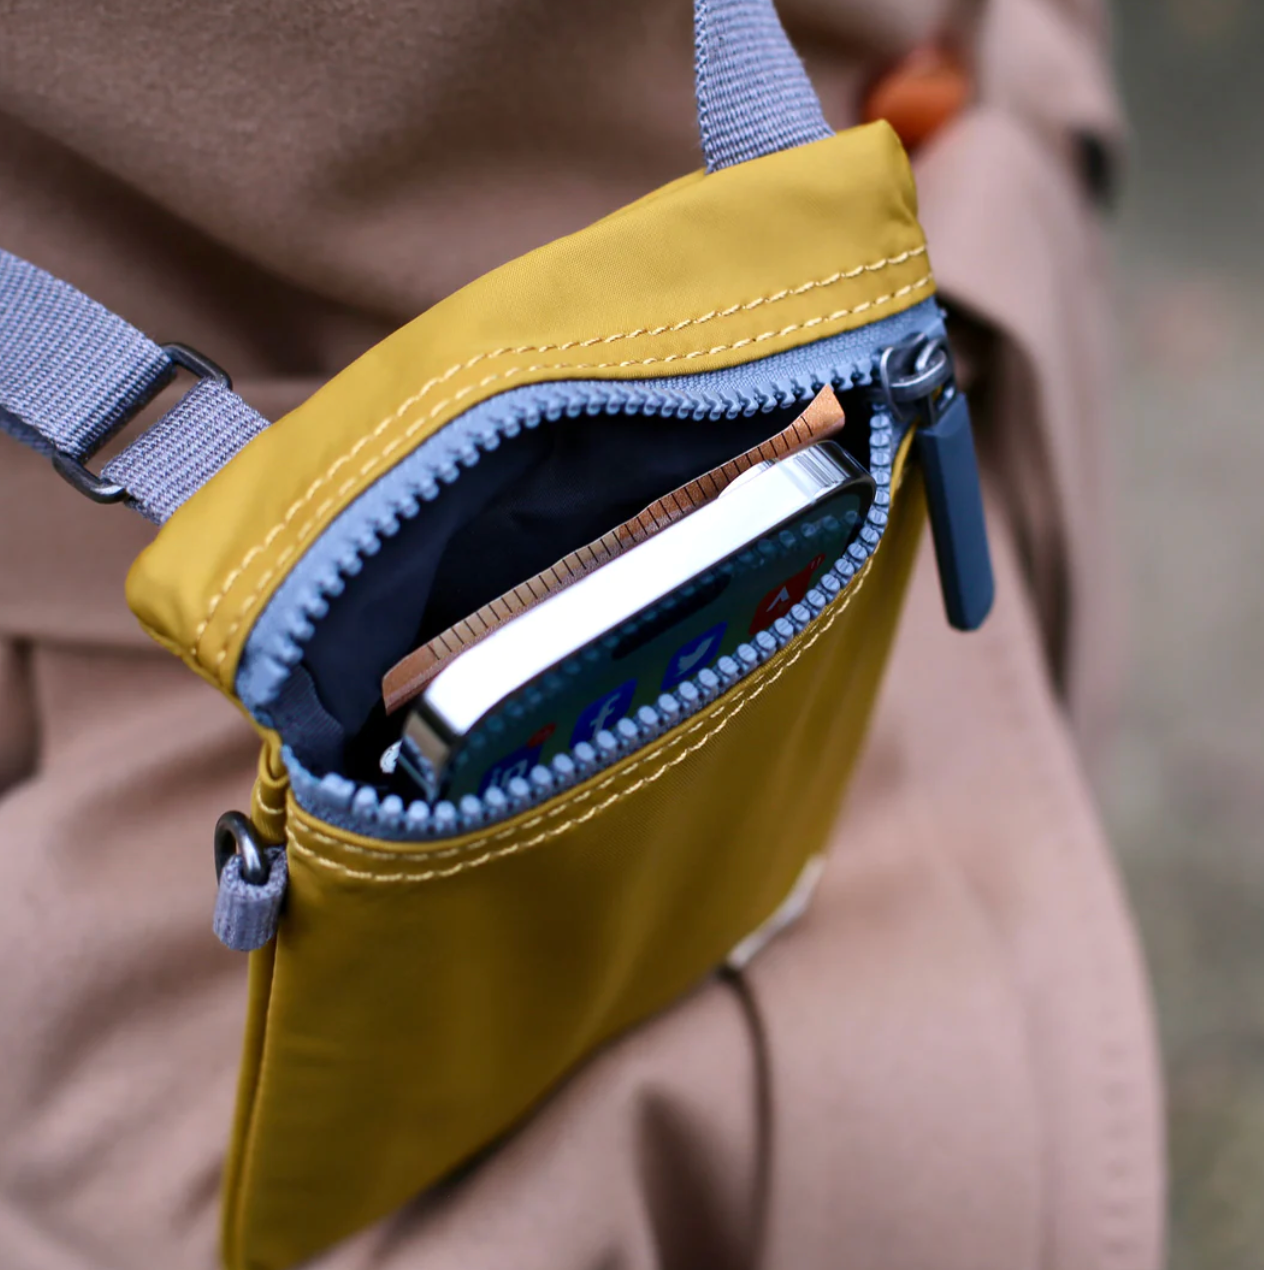 Roka London Chelsea Crossbody Phone Bag, Granite (Sustainable Canvas)